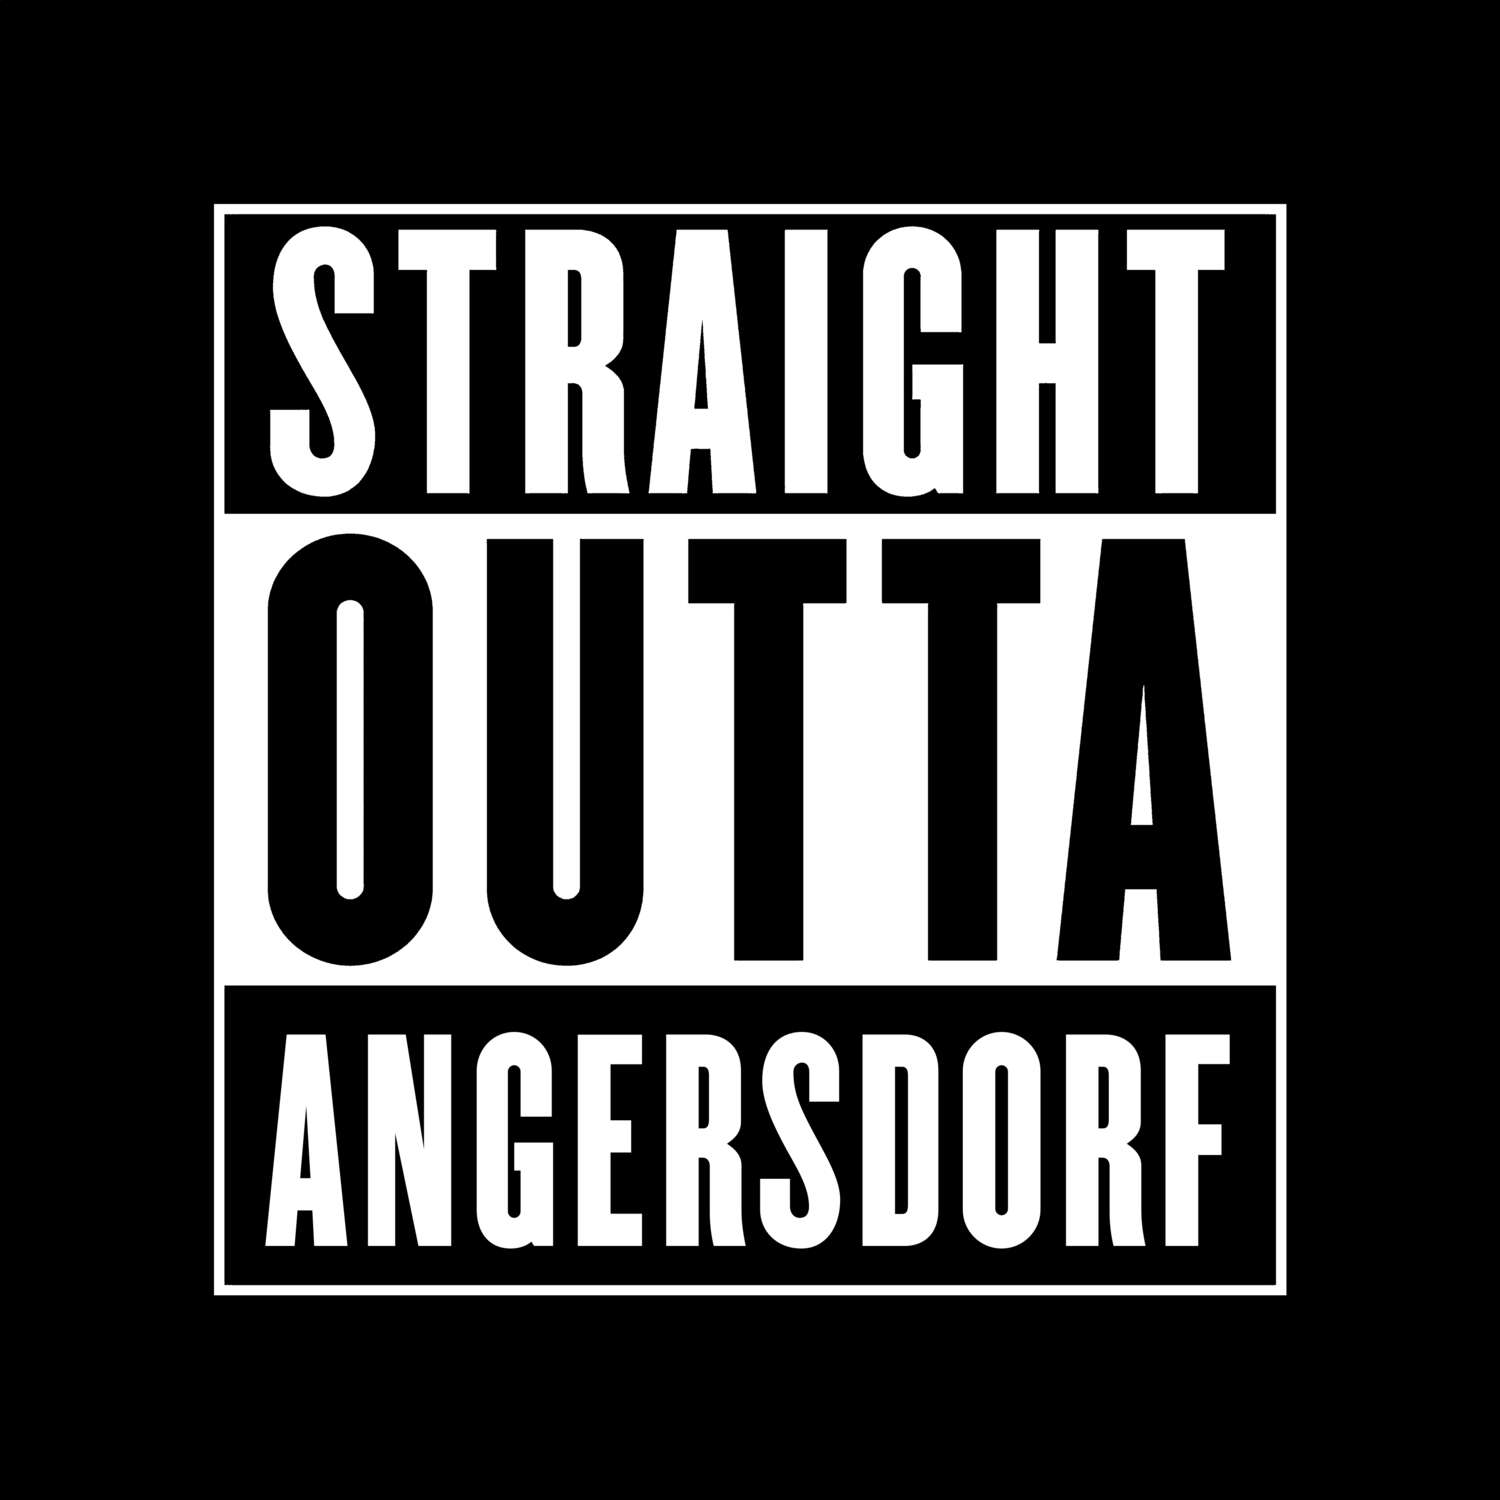 Angersdorf T-Shirt »Straight Outta«